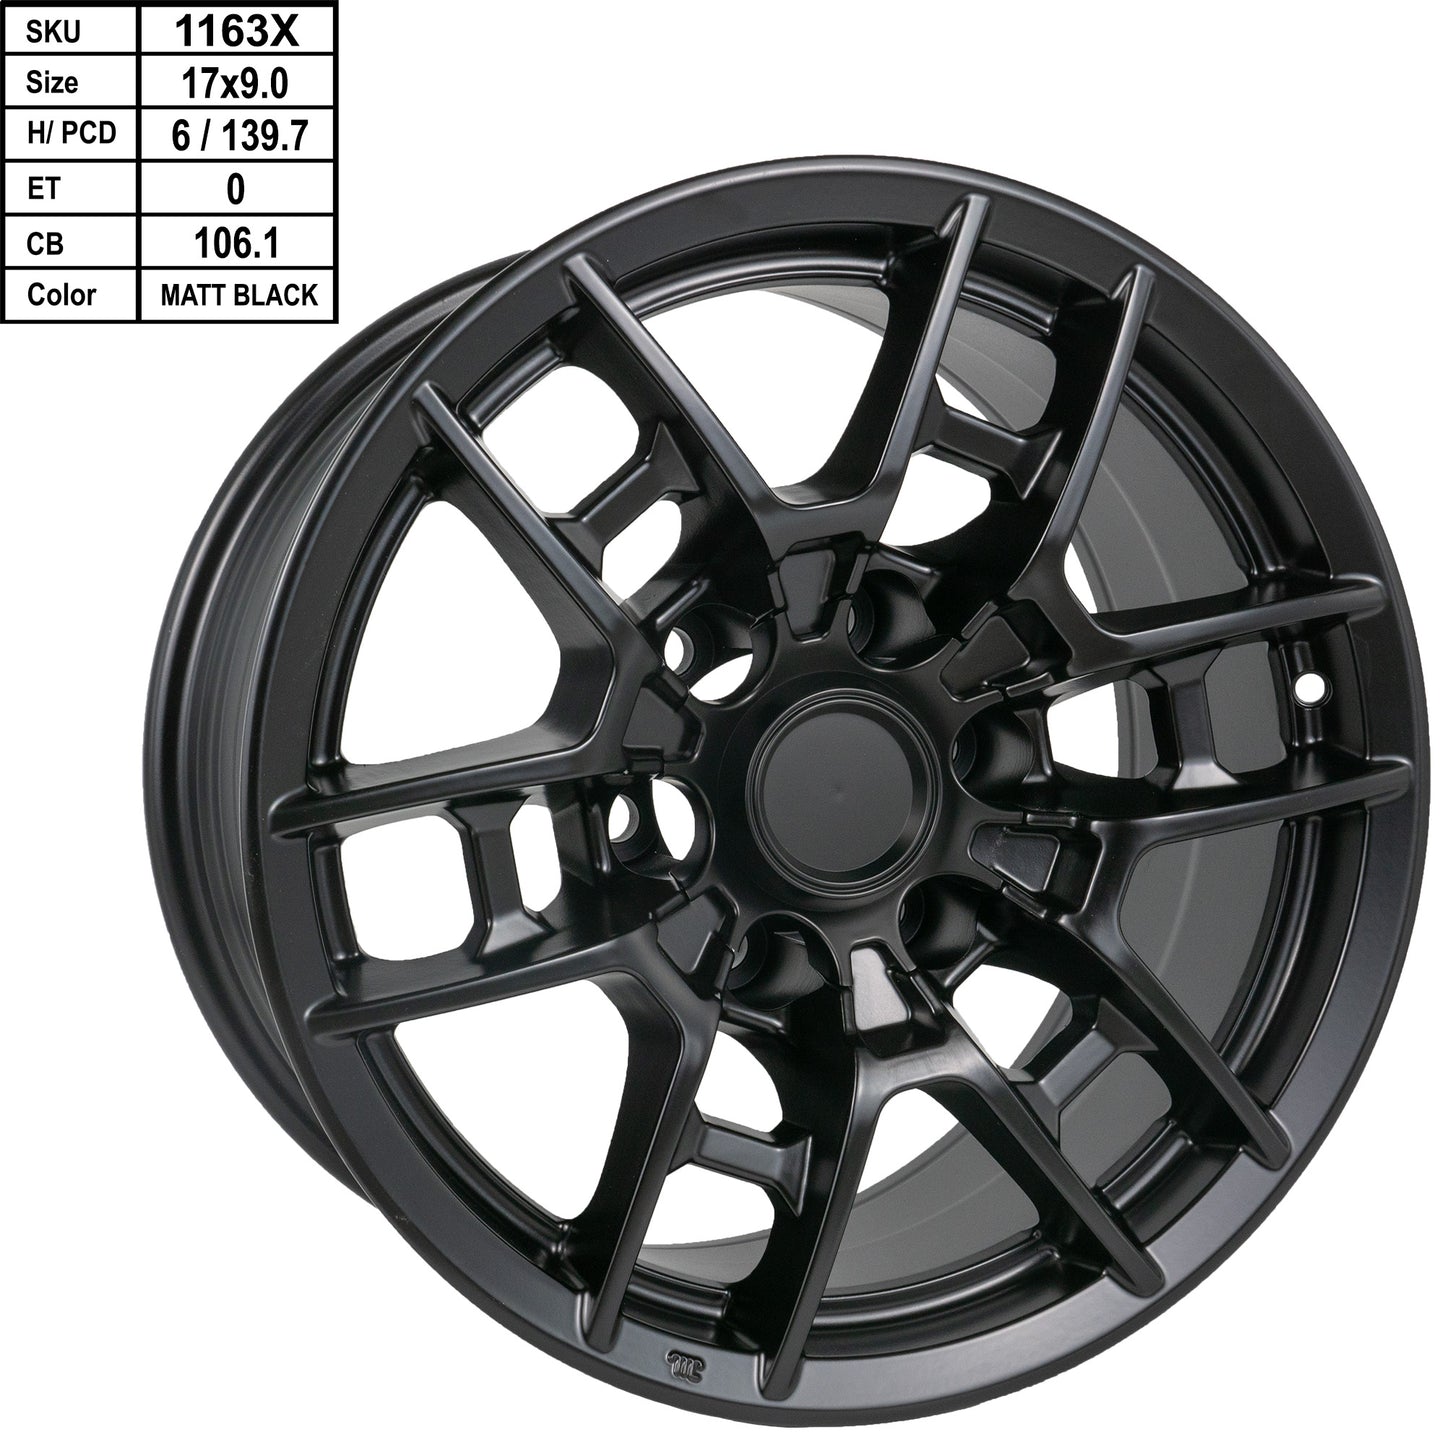 Wheels 17" x 8/9 Matte Black Rims Set of 4